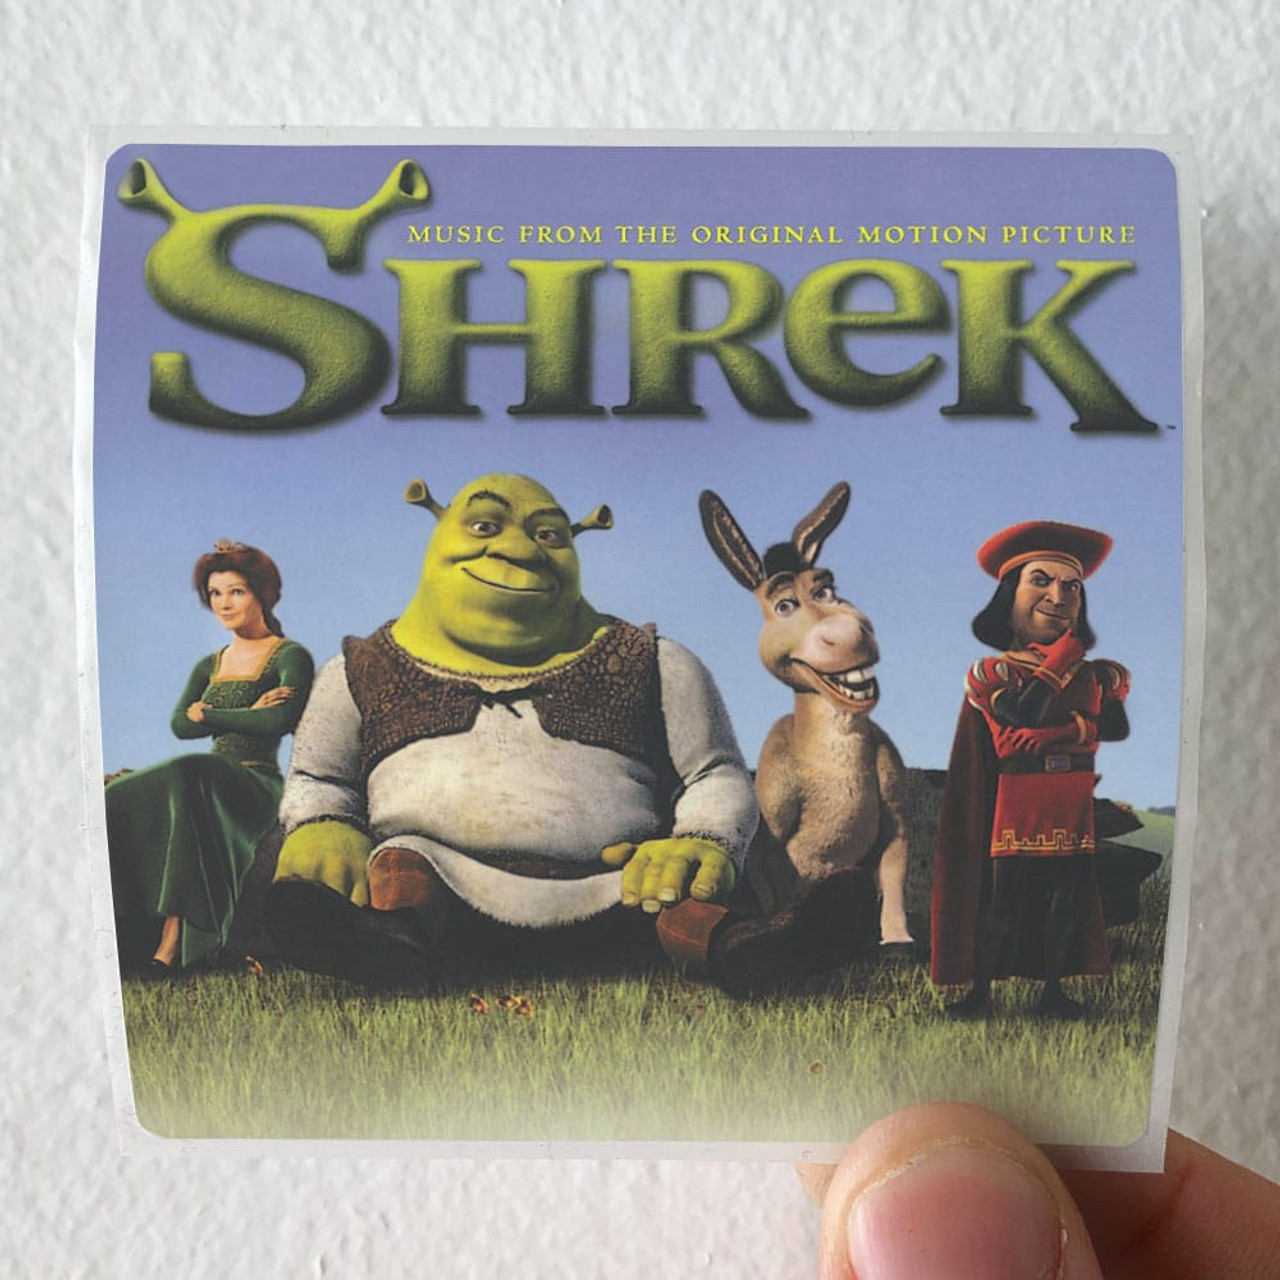 Shrek — Various Artists